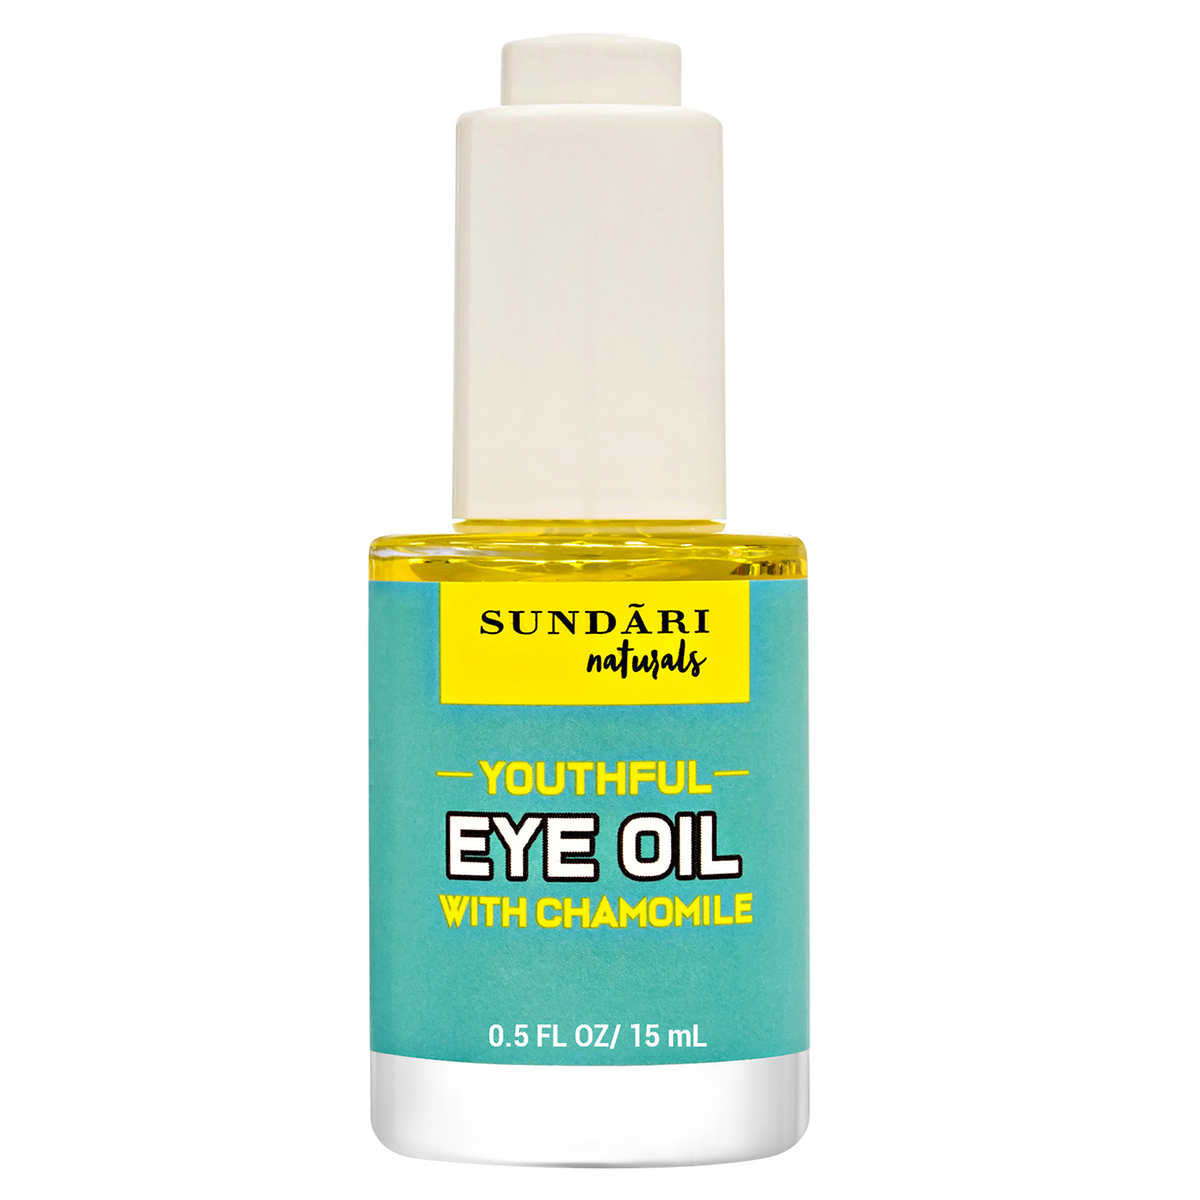 SUNDÃRI naturals Youthful Eye Oil With Chamomile  Edit alt text